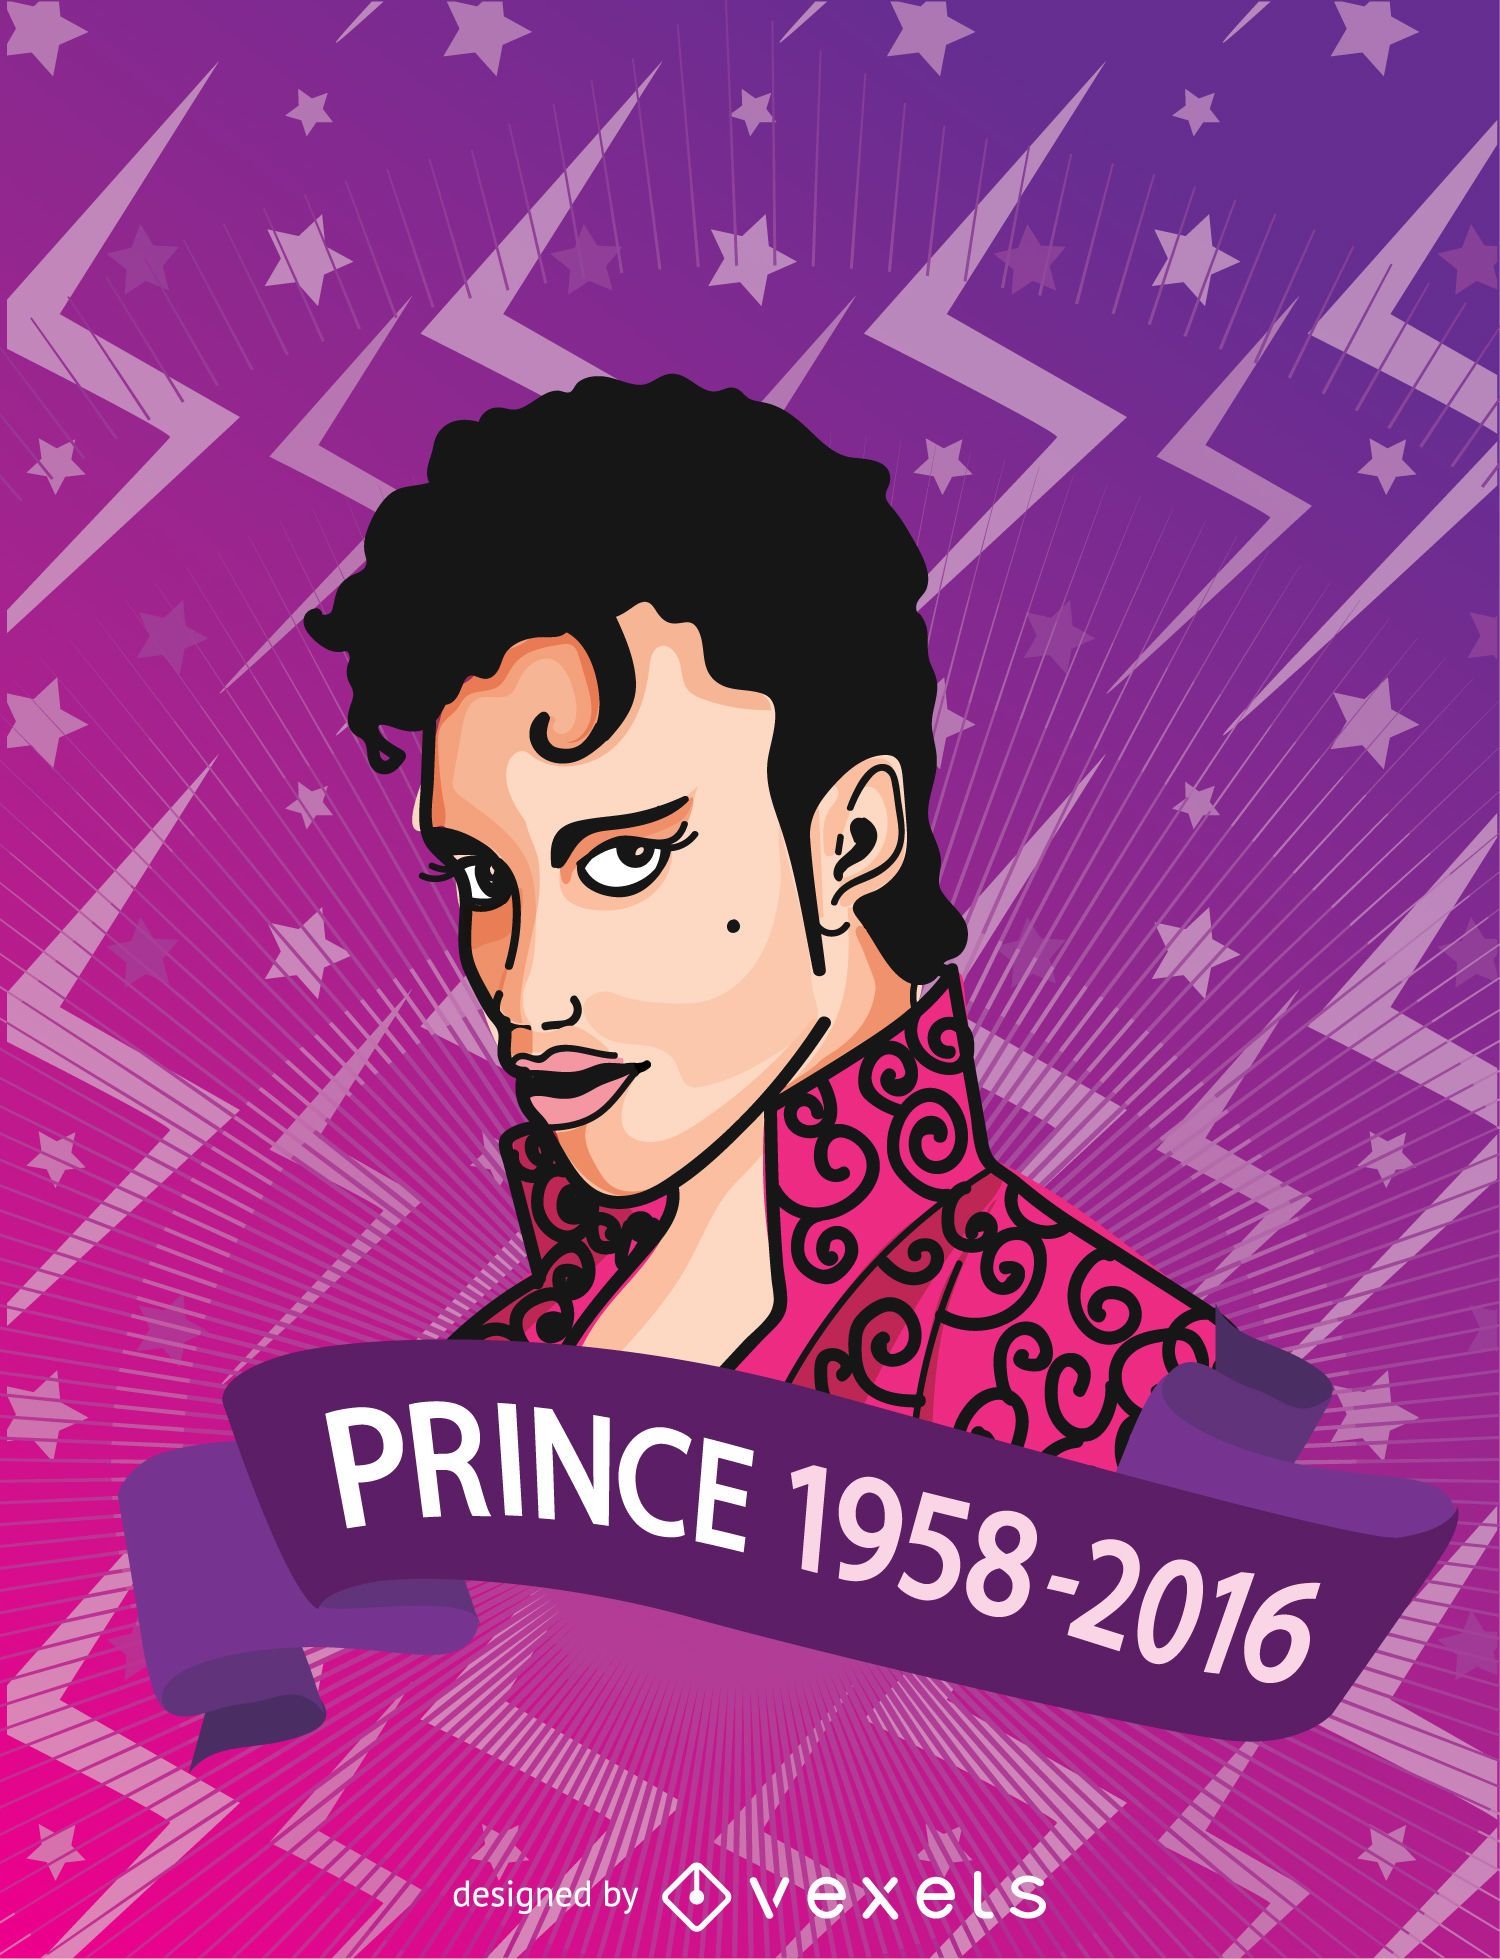 Prince R.I.P commemorative poster